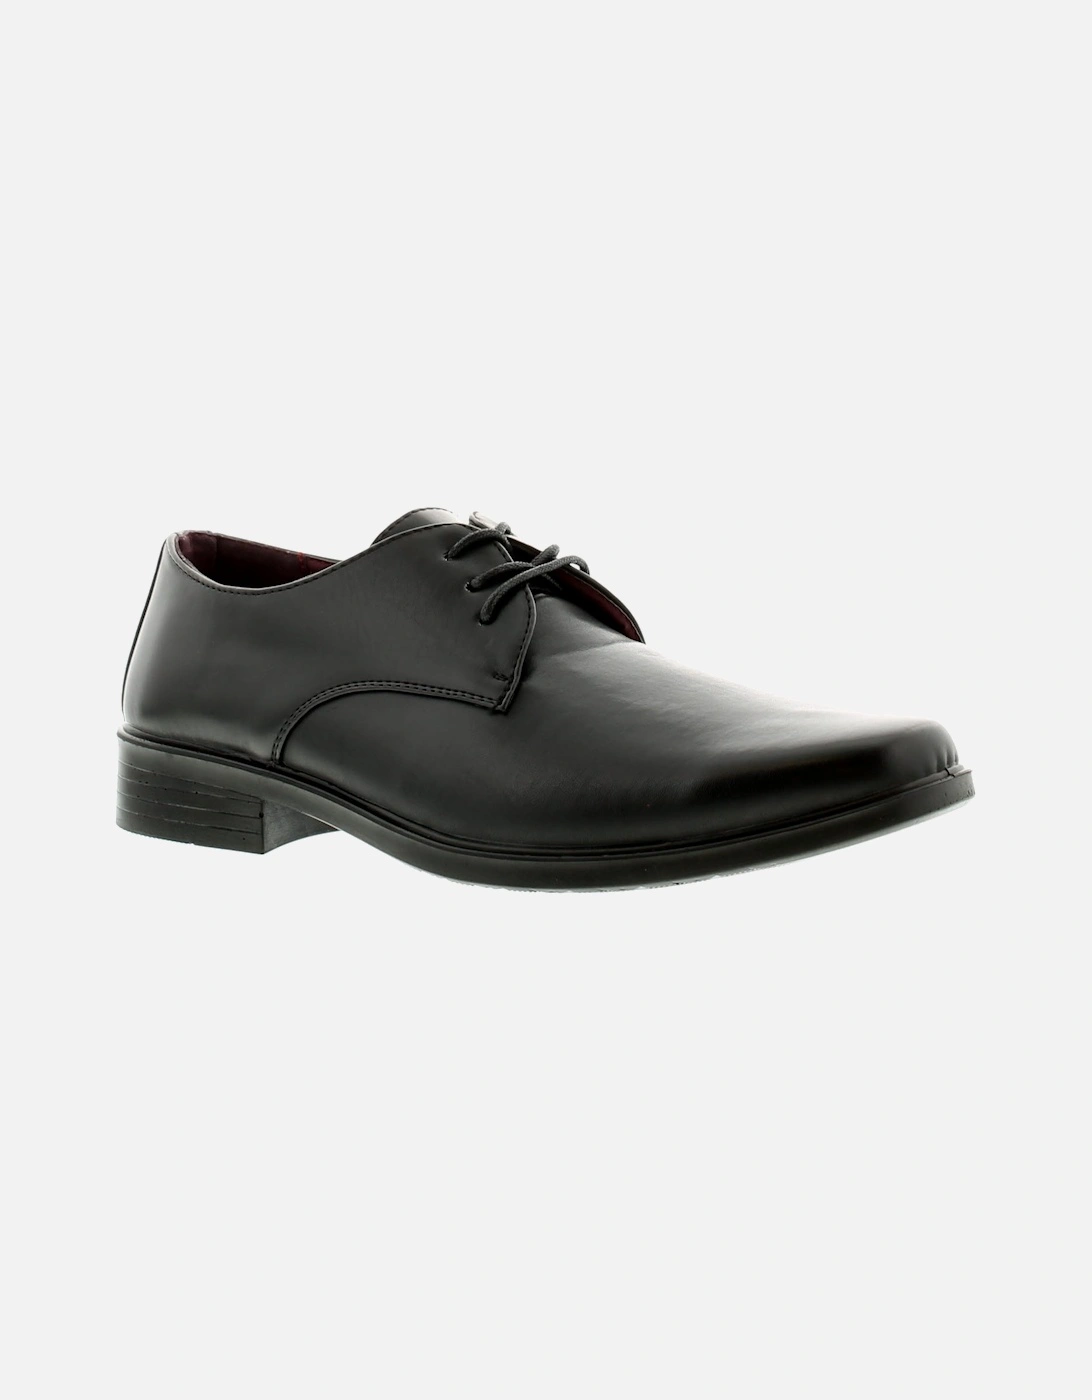 Shoes Mens Smart Formal Drift Lace Up black UK Size, 6 of 5